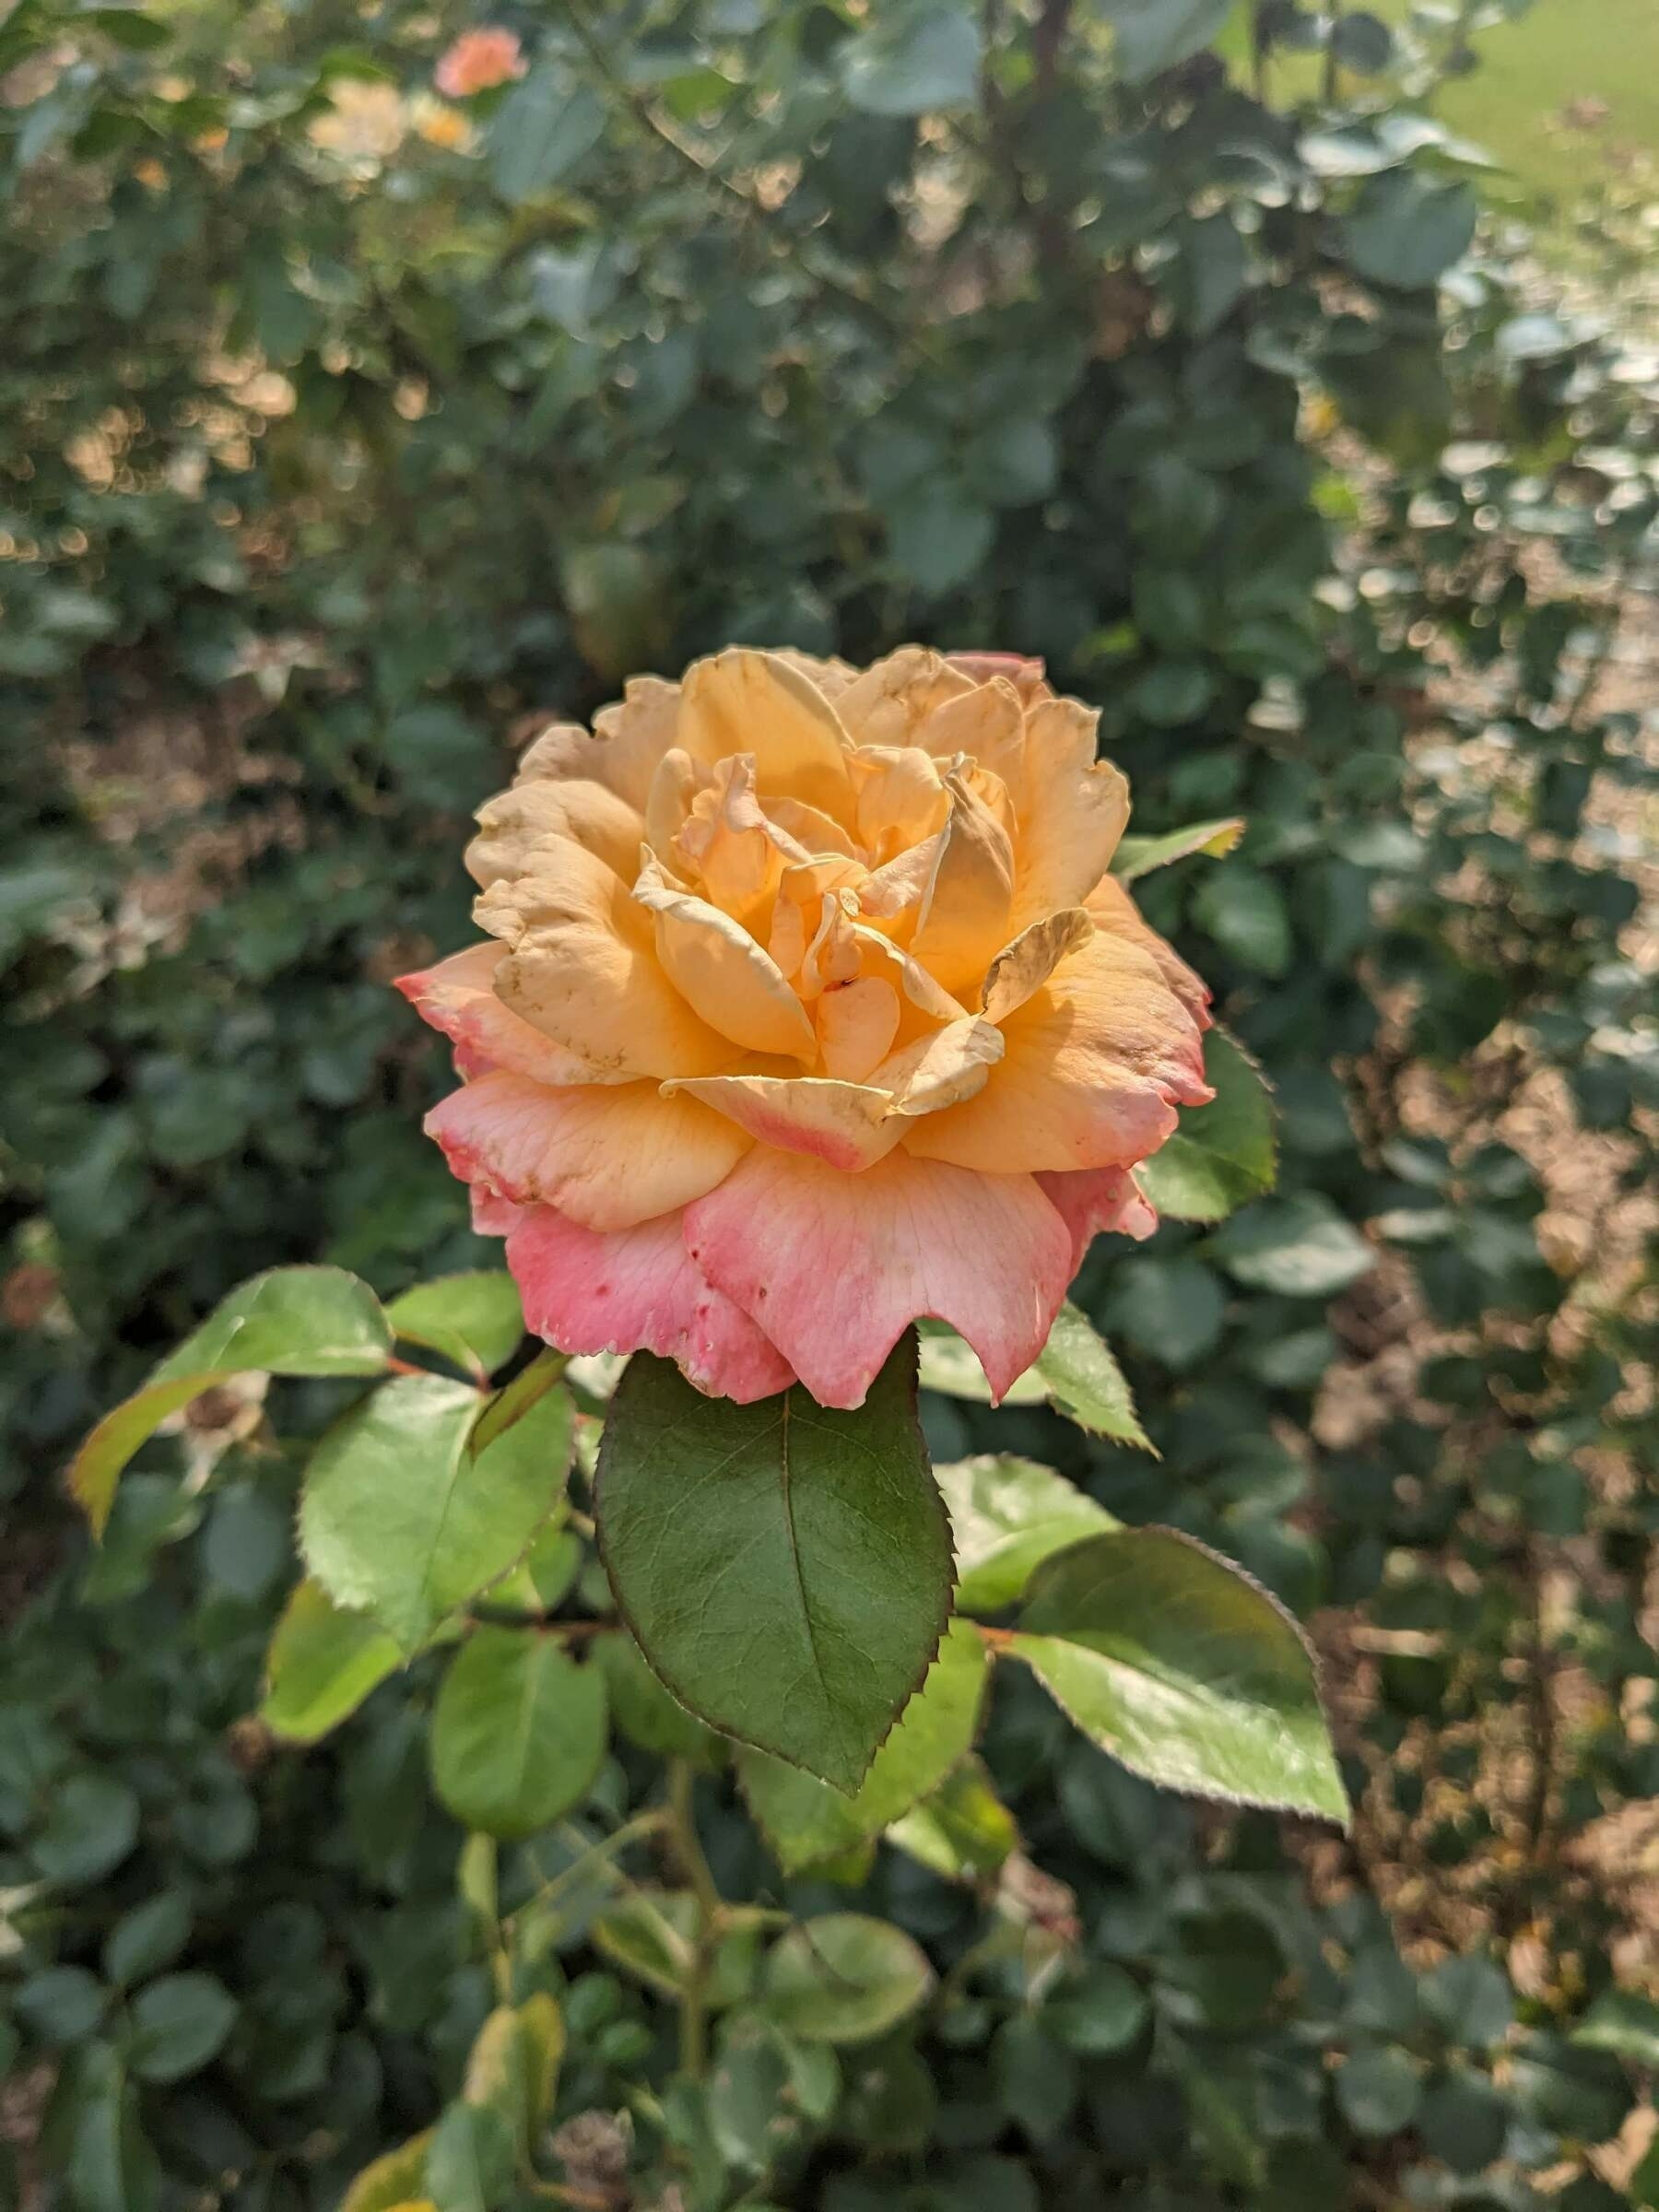 a light orange and pink rose